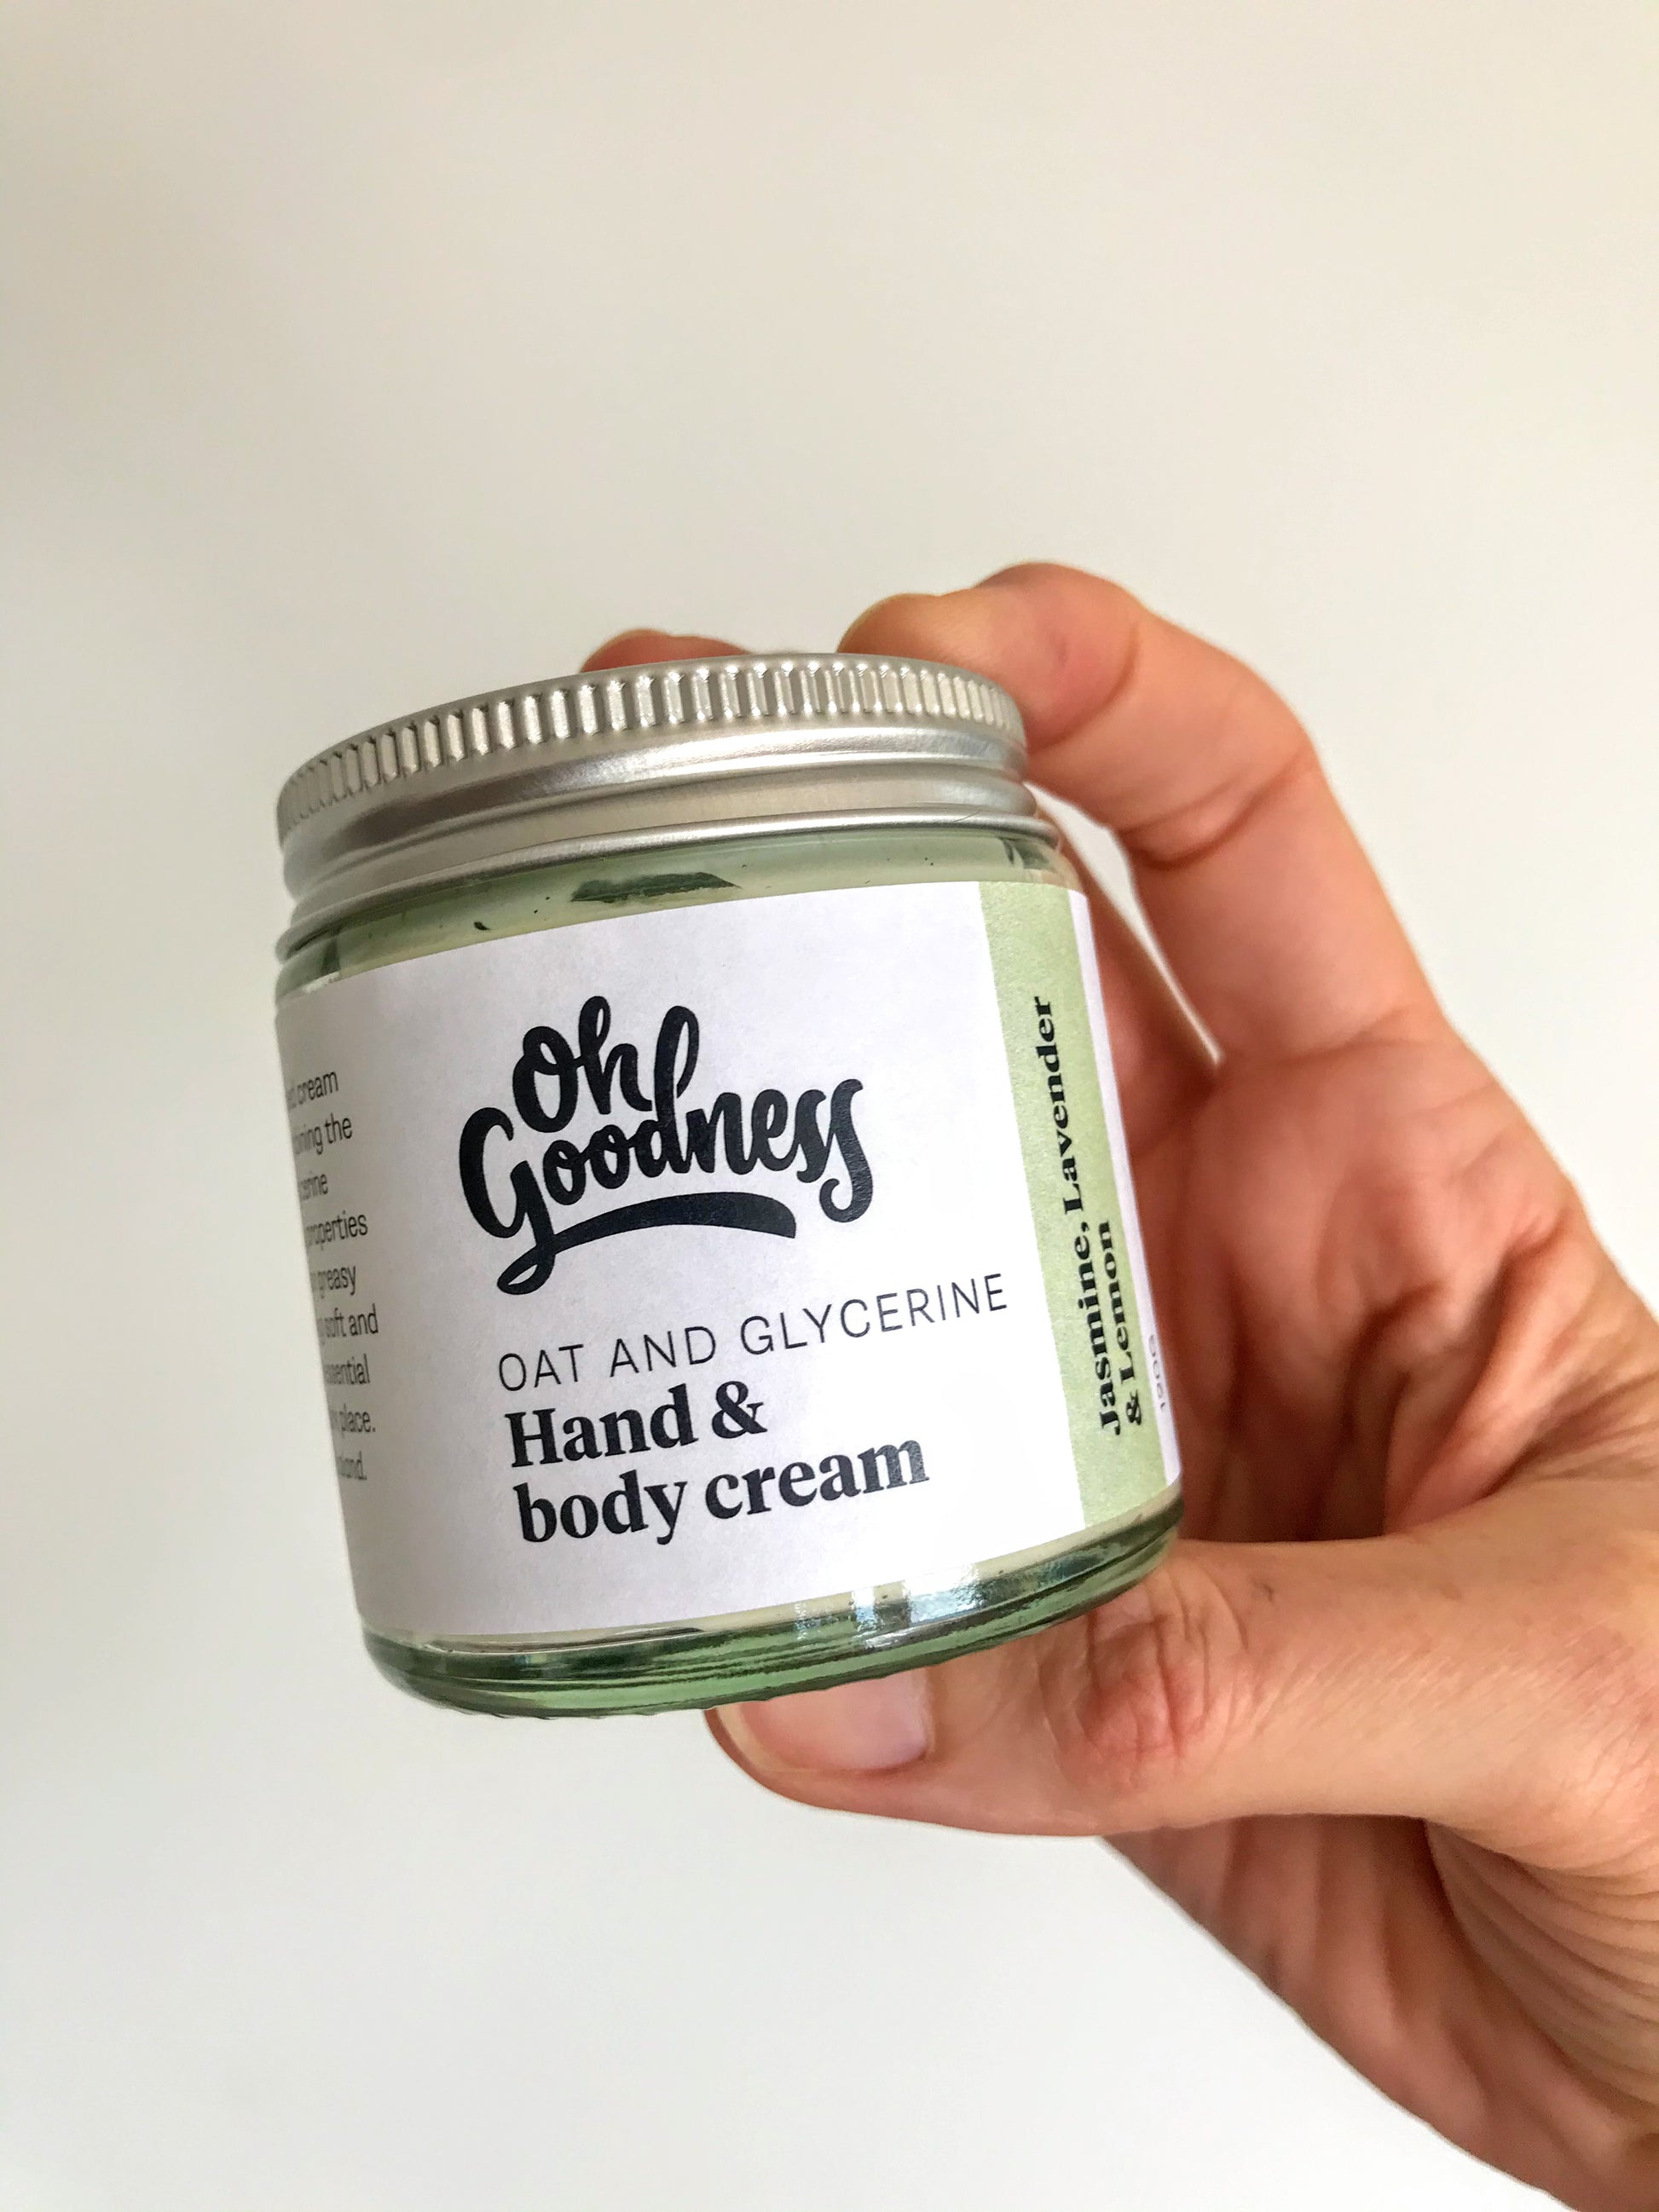 Oat & Glycerine hand & body cream Oh Goodness